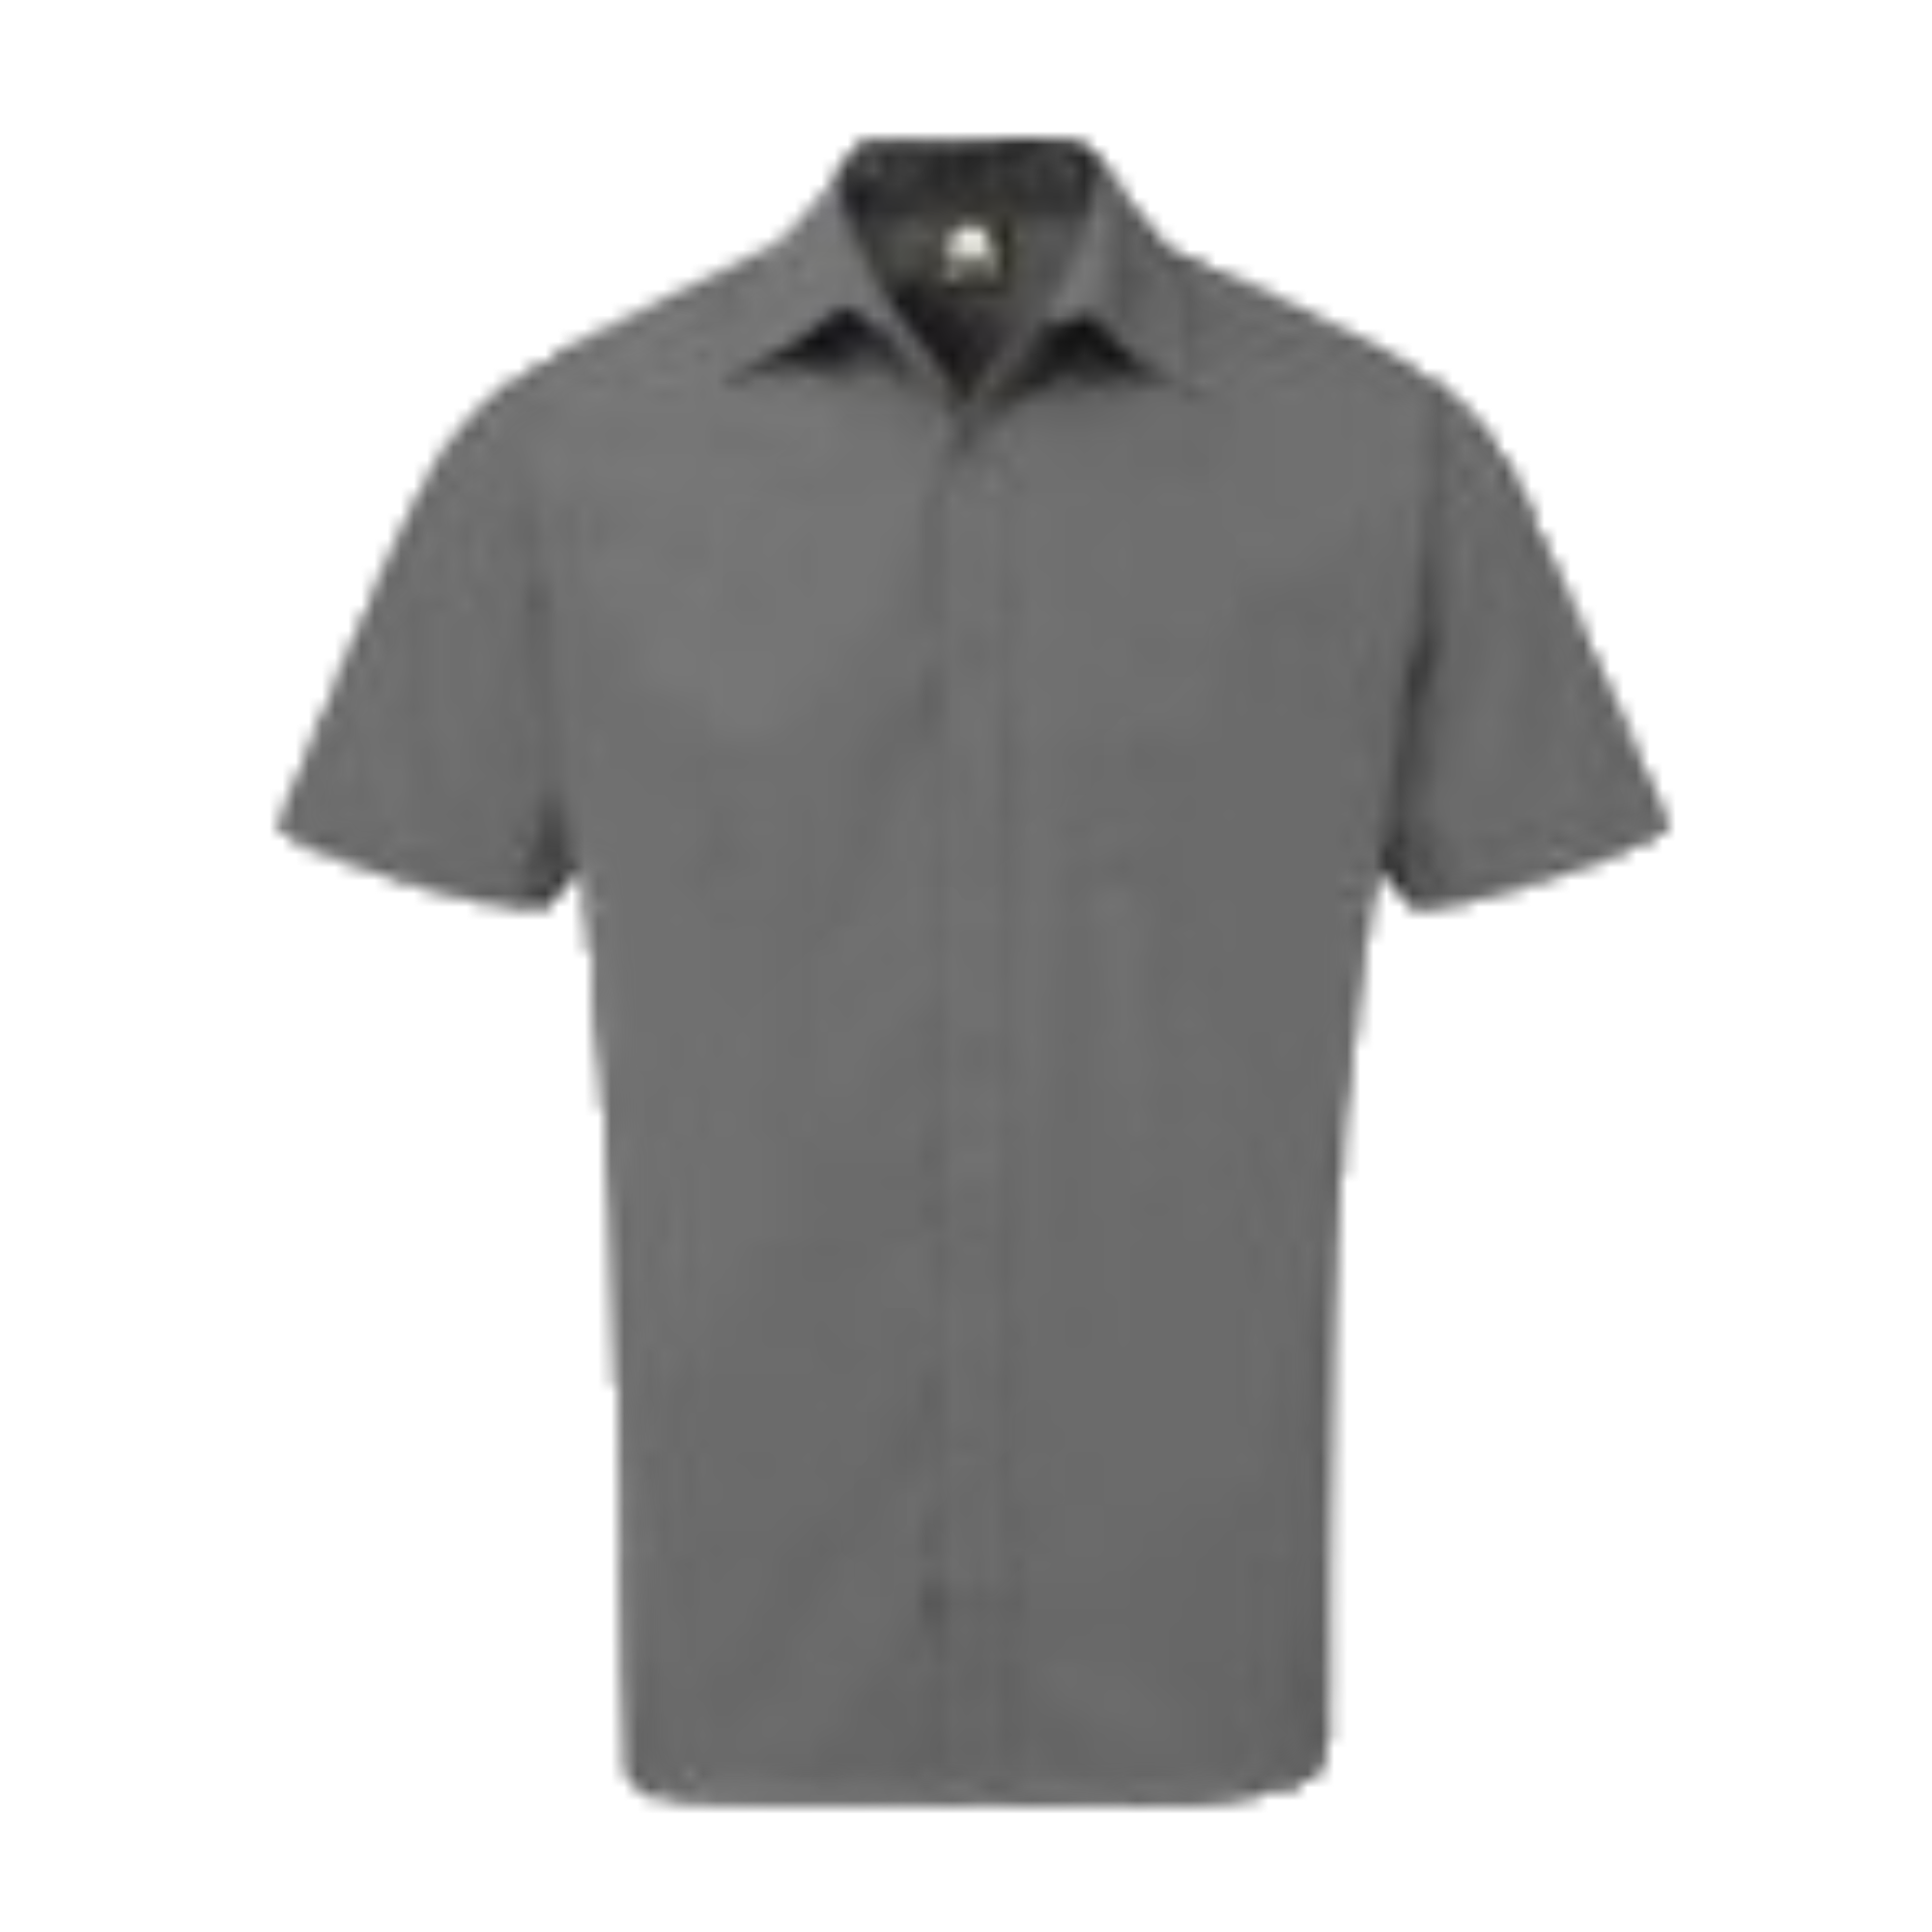 Orn Premium Oxford Short Sleeve Shirt - Dark Grey - 15 - TJ Hughes